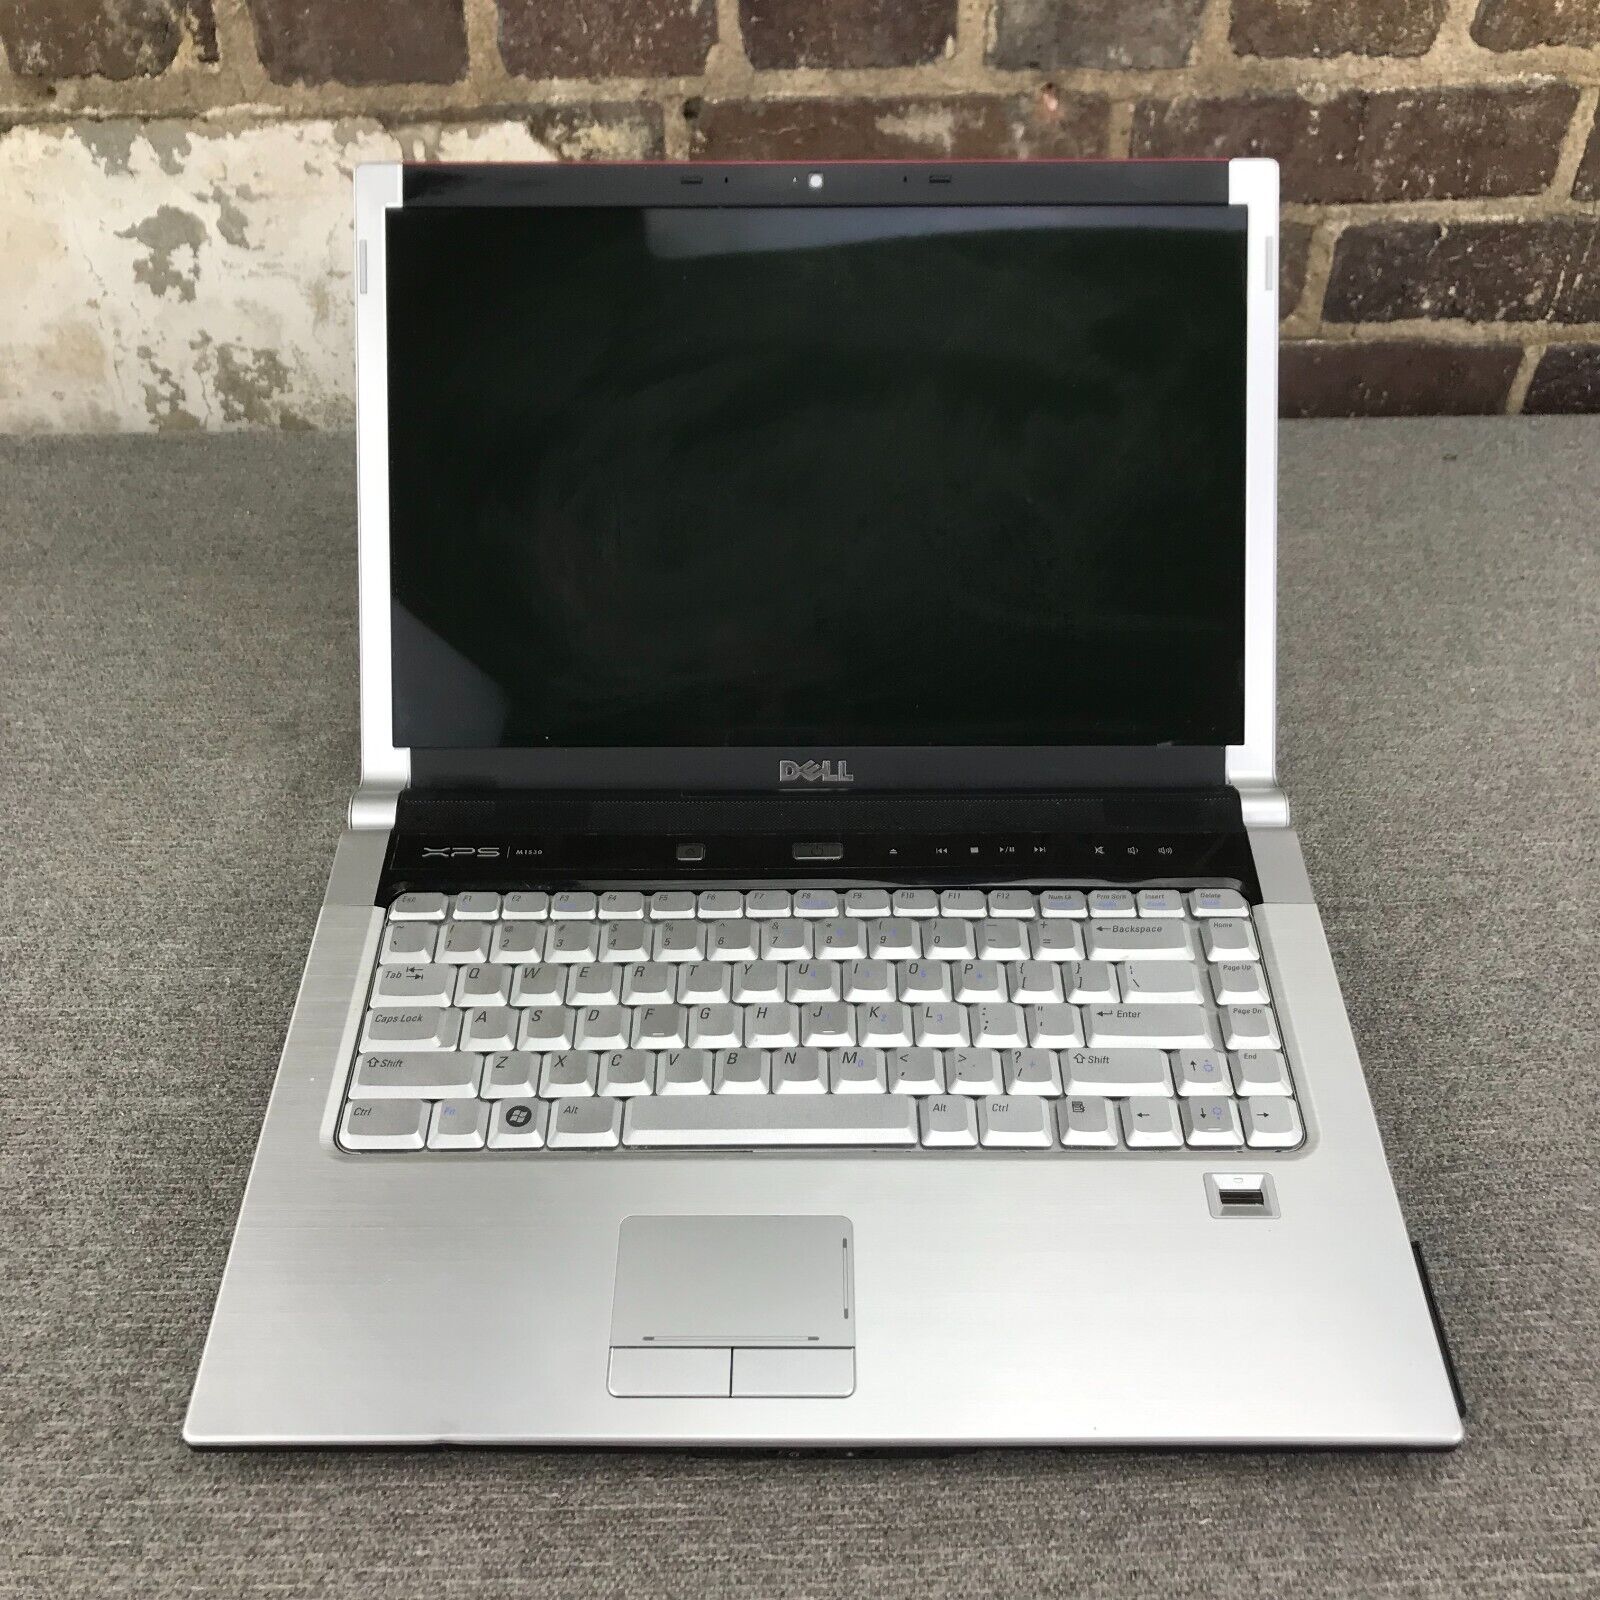 Dell XPS Studio M1530 Laptop Core 2 2.40GHz 4GB RAM - Windows Vista Retro Gaming